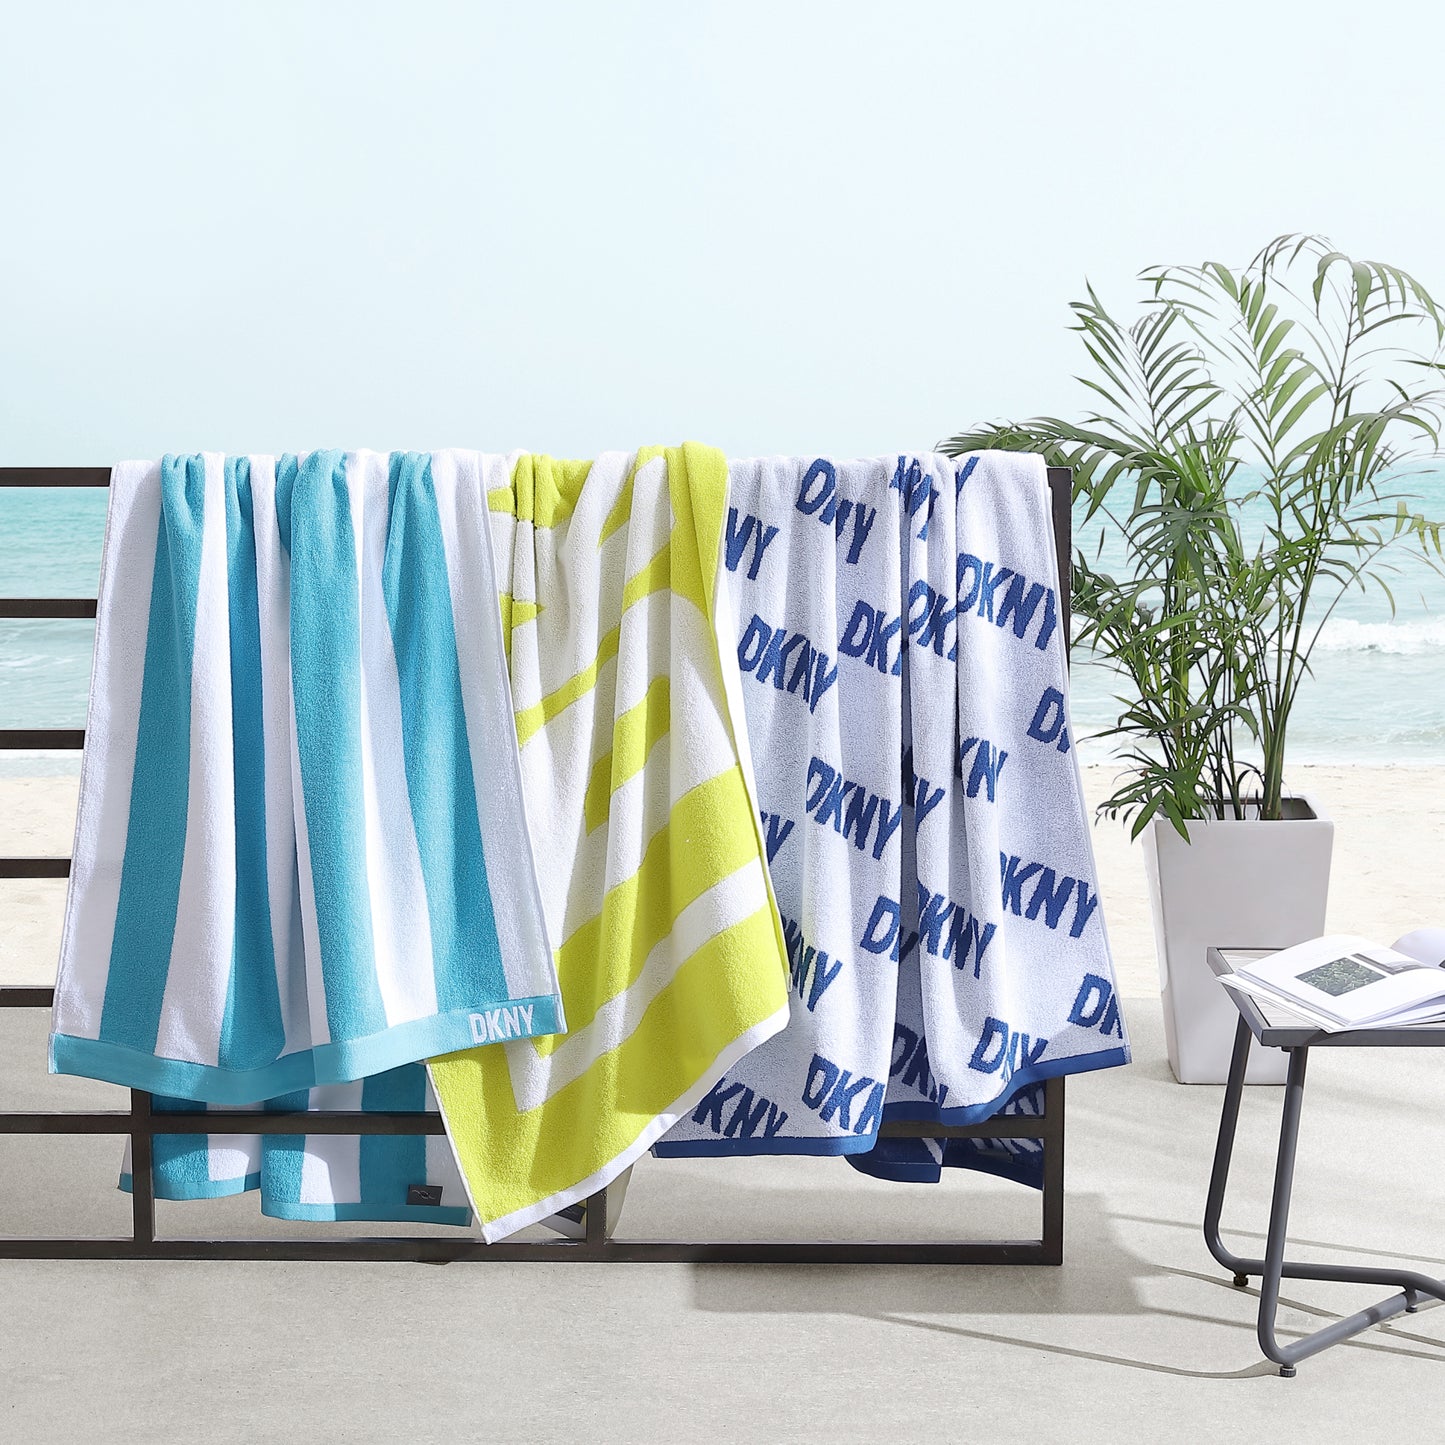 DKNY Cabana Stripe Beach Towel